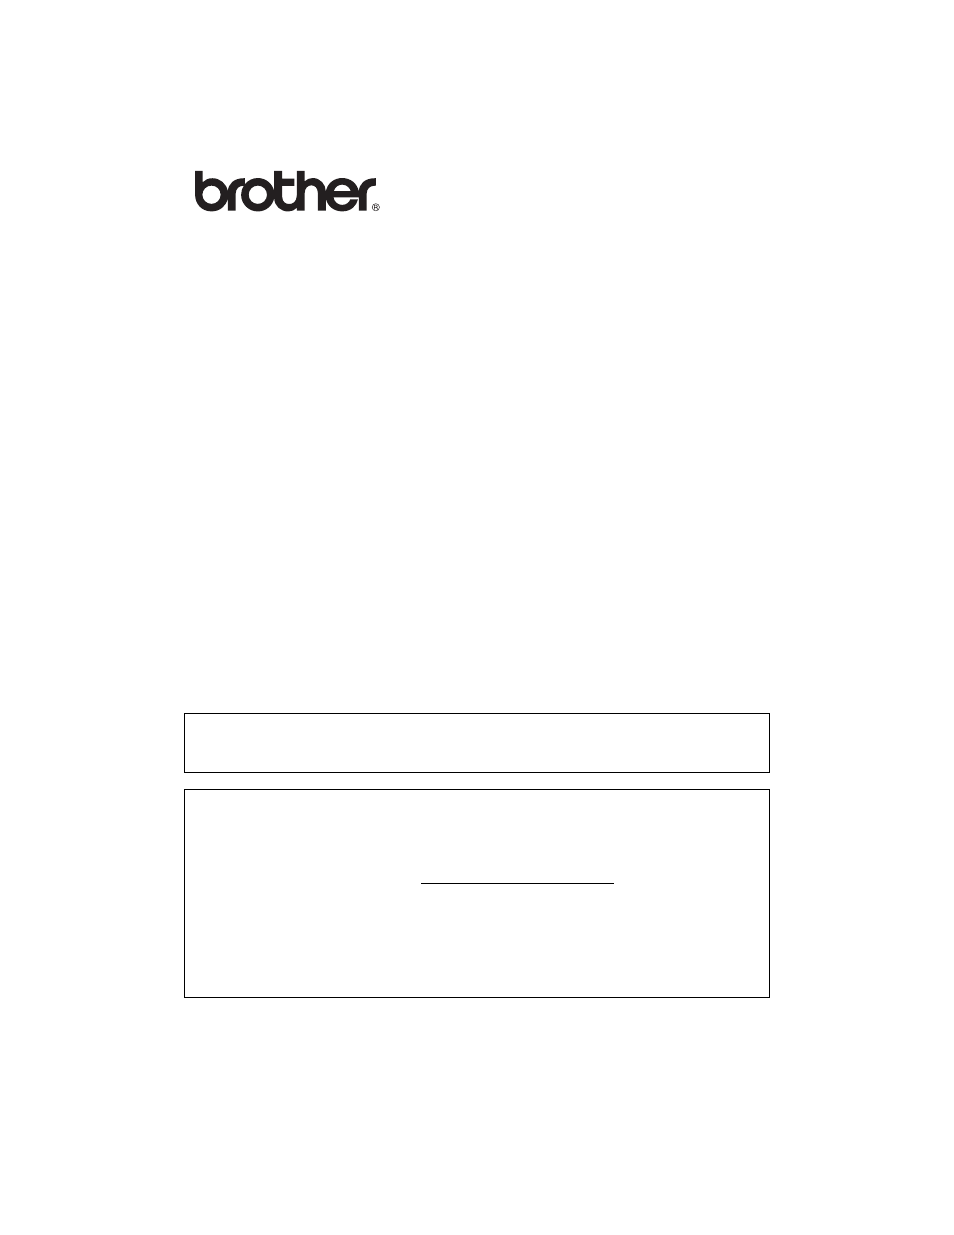 Brother NC-7100W Manuel d'utilisation | Pages: 146